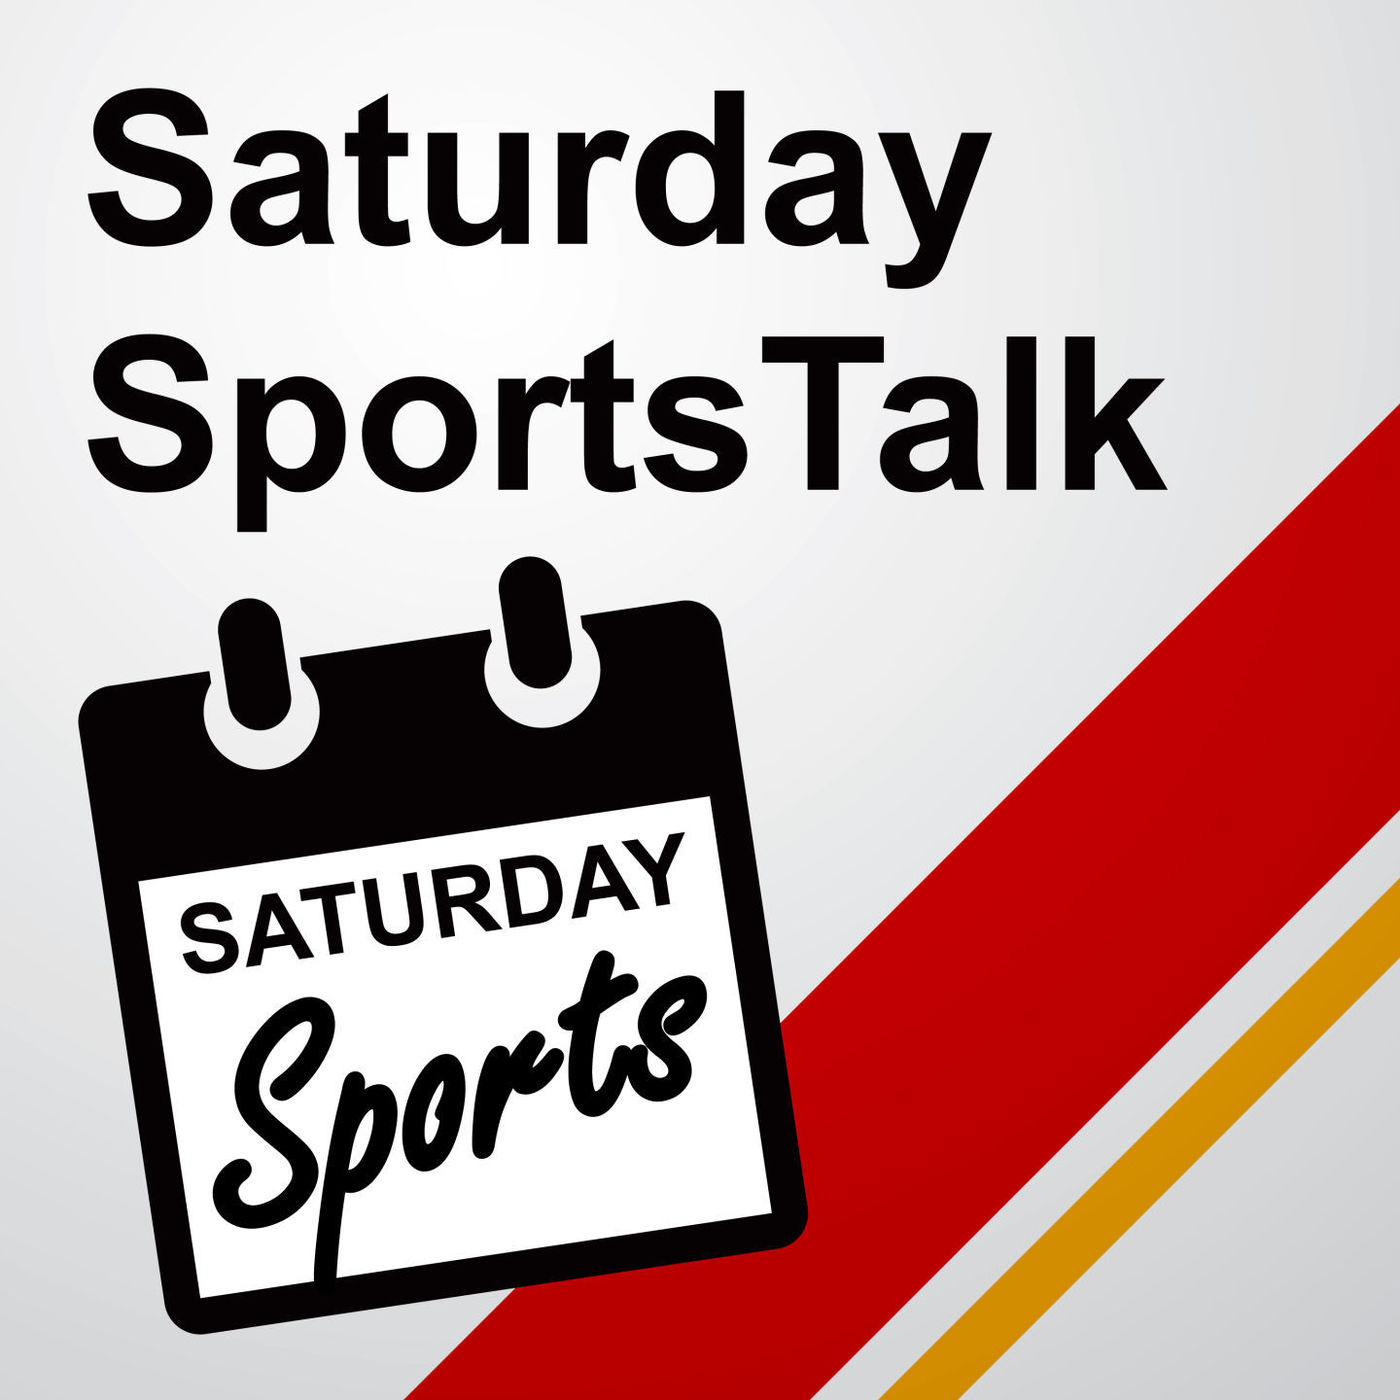 Illini Inquirer Podcast: An Illinois Fighting Illini athletics podcast